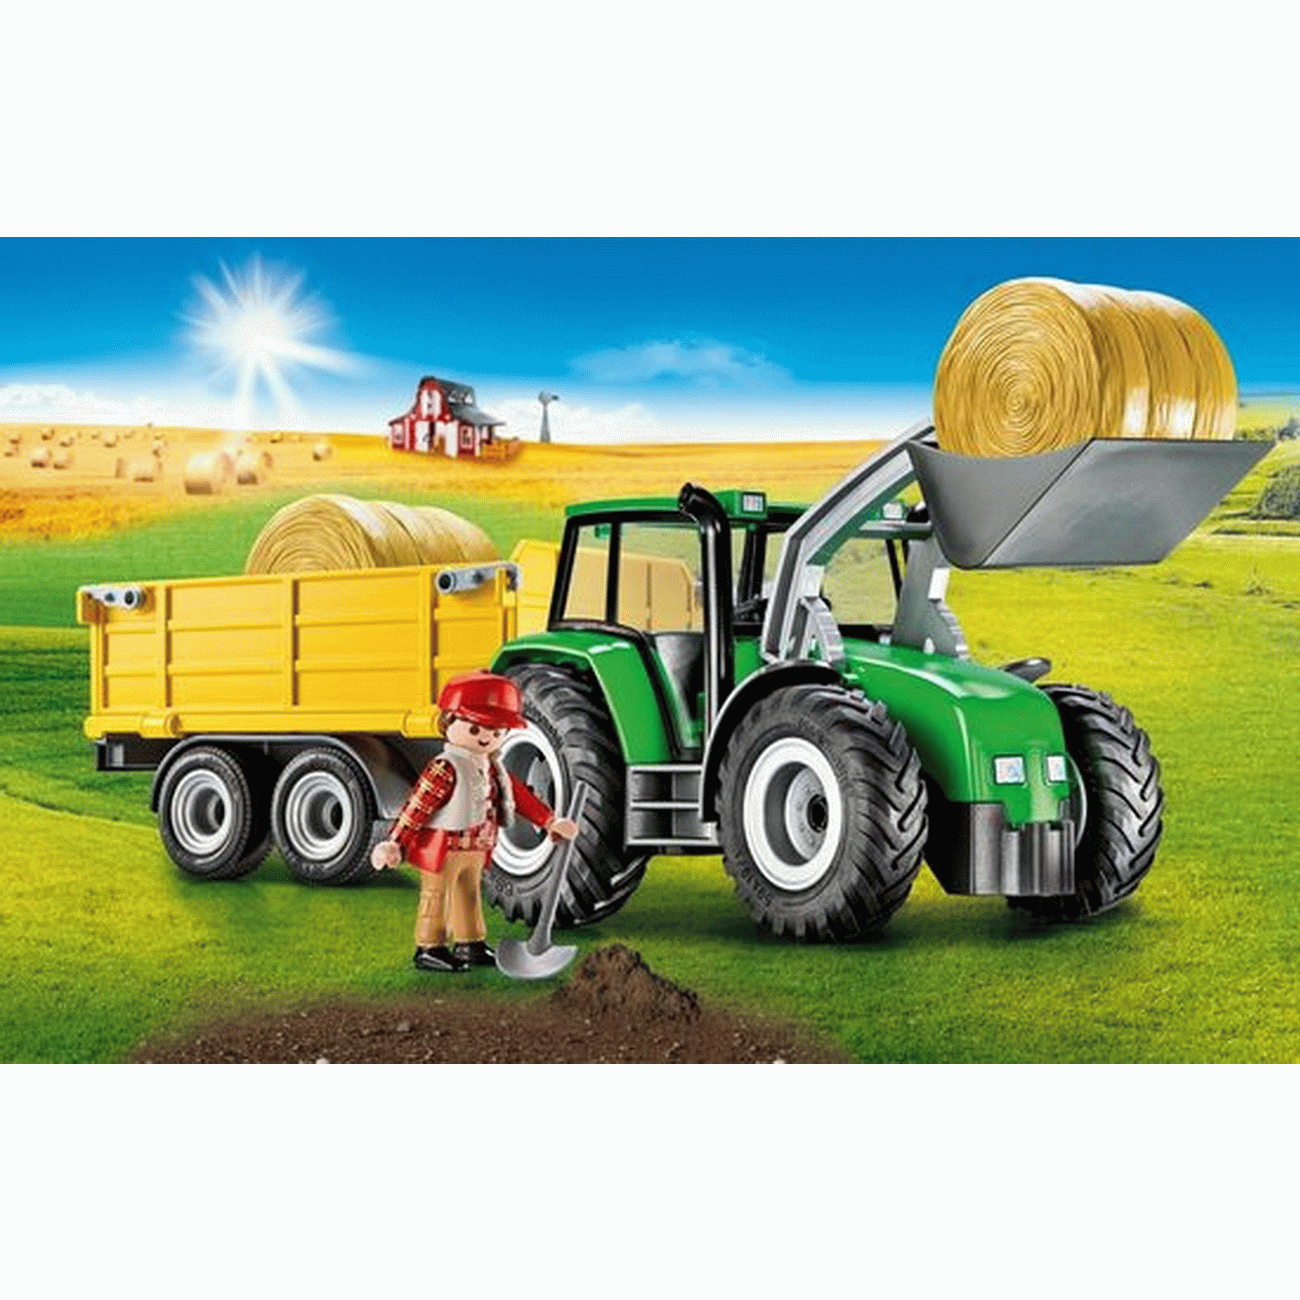 Playmobil 9317- Traktor mit Anhänger (Country)